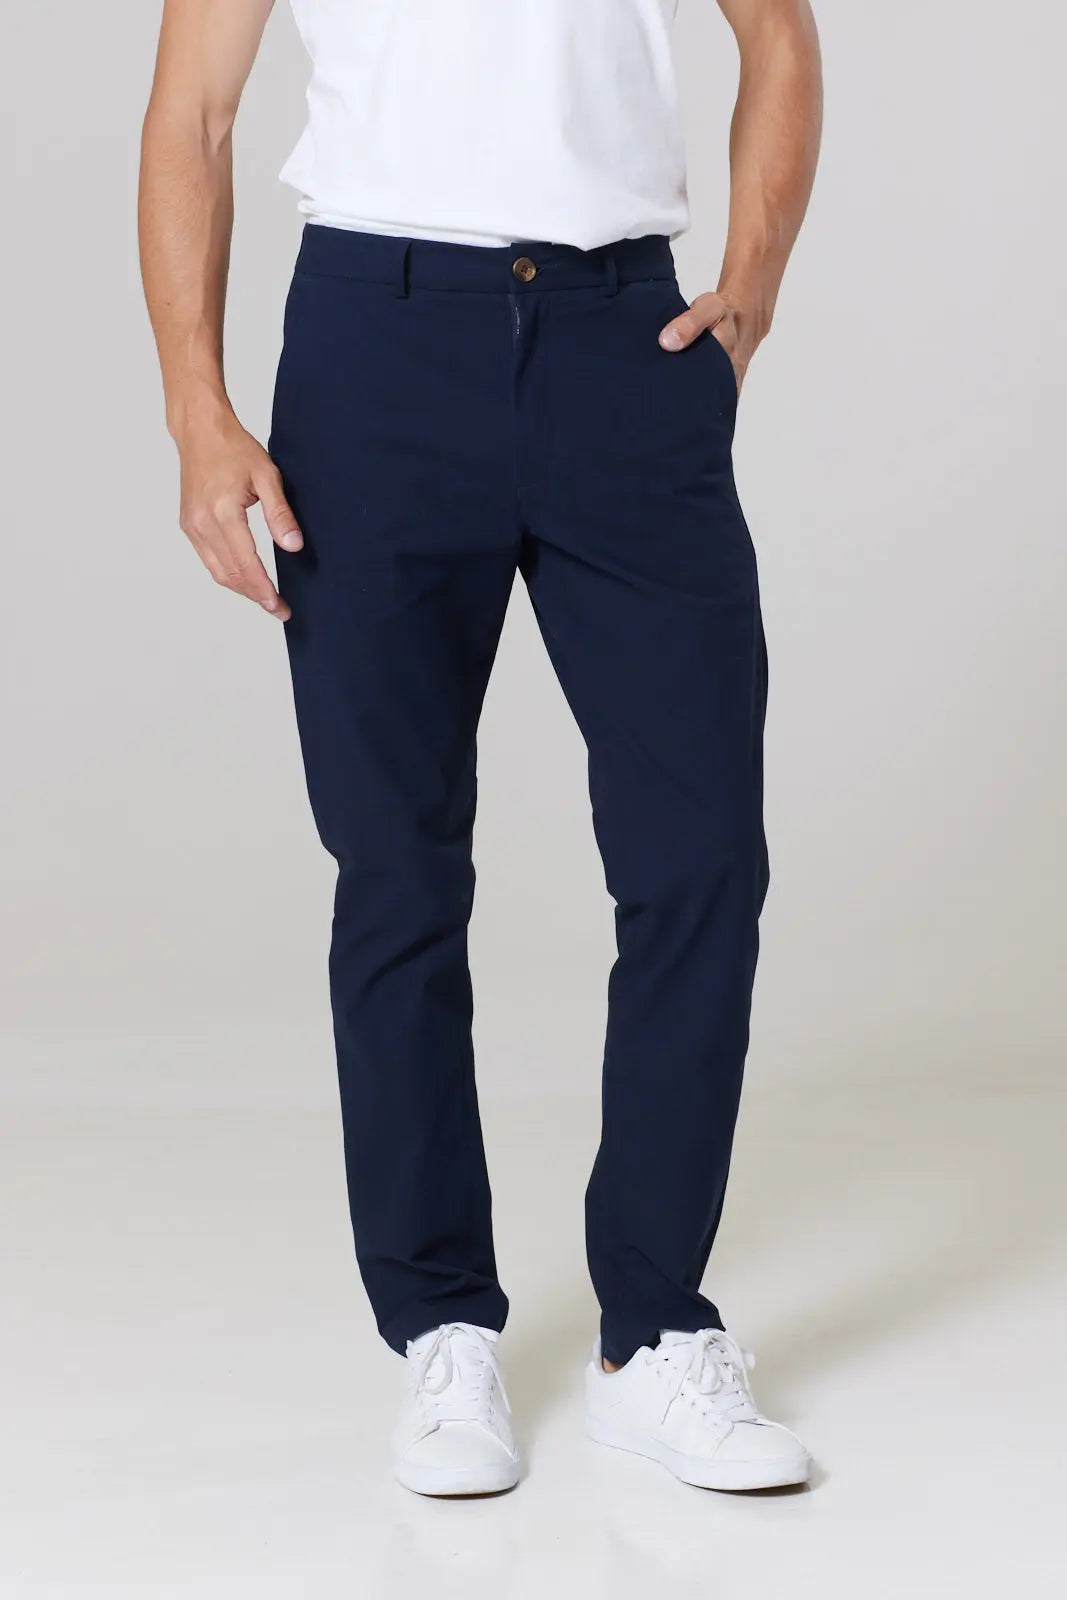 Buxton Trousers - Navy Wear London